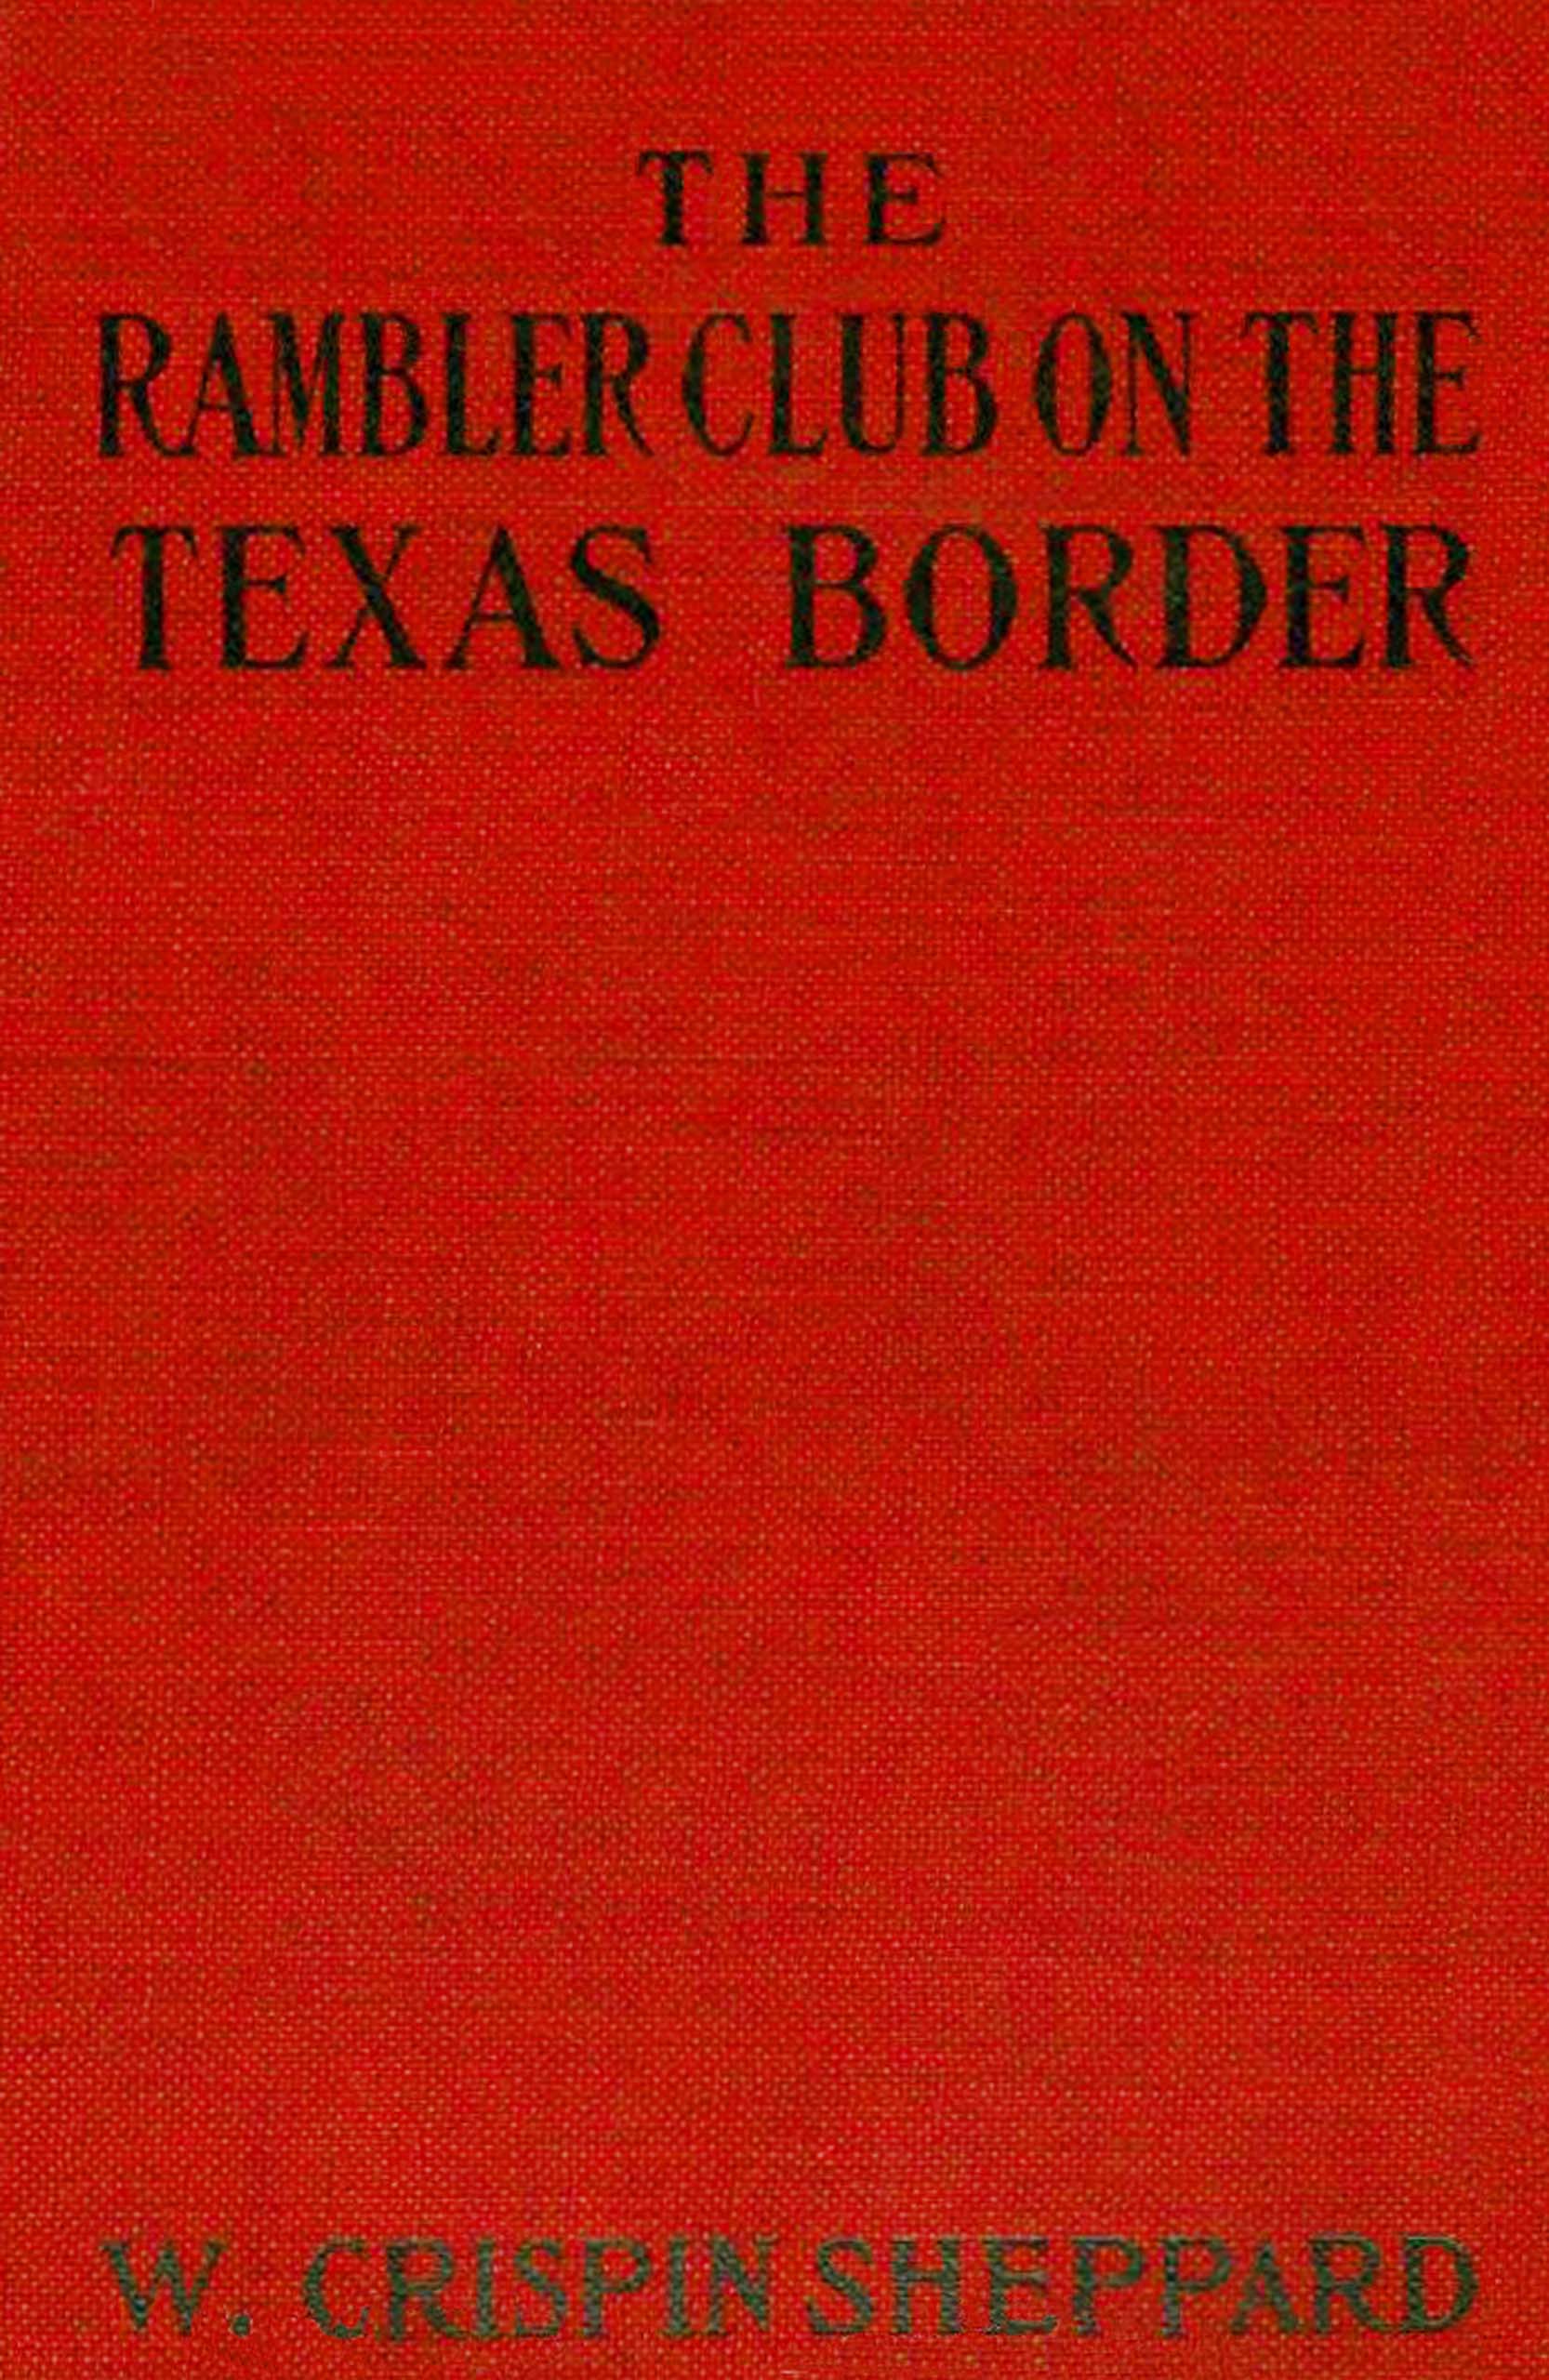 The Rambler Club on the Texas border